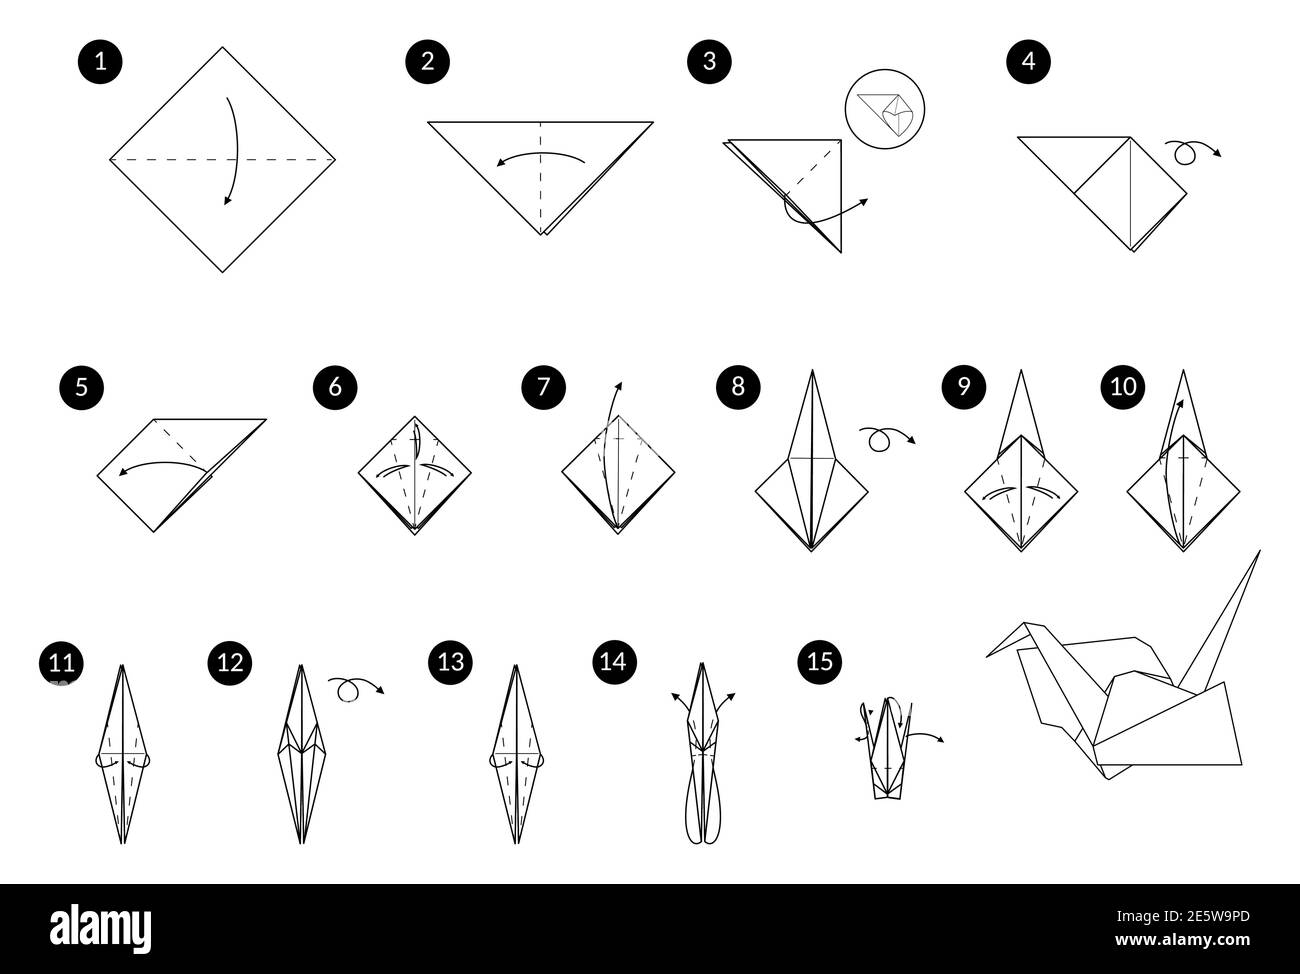 Origami crane instructions Black and White Stock Photos & Images - Alamy